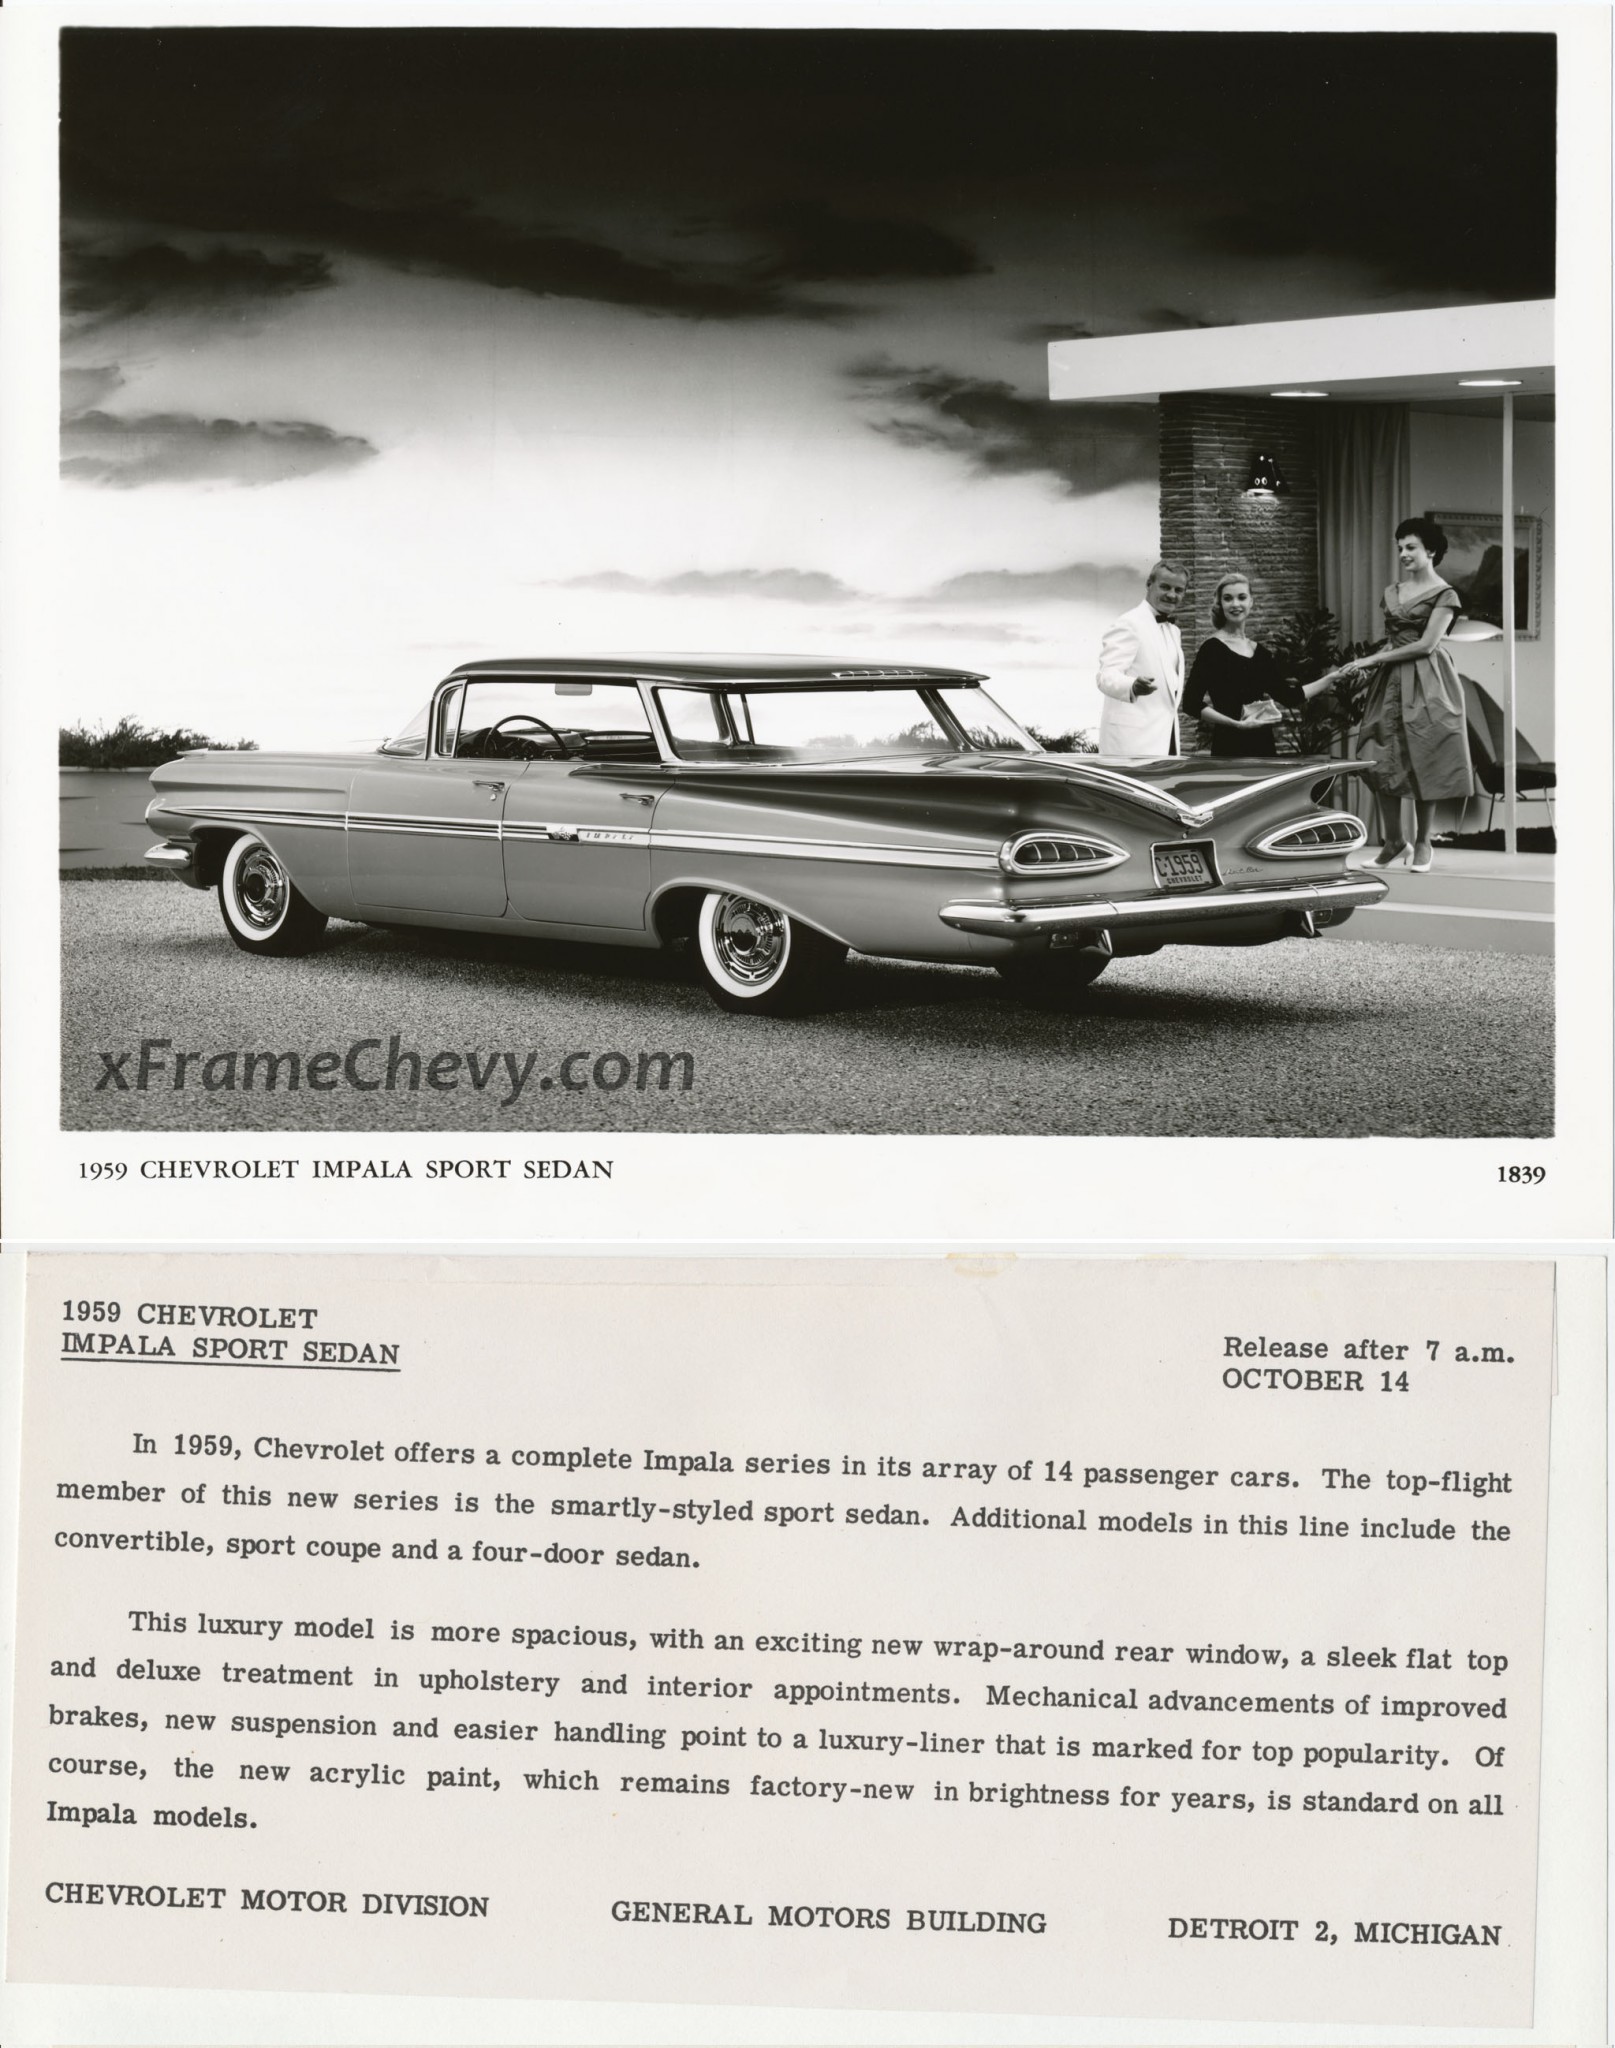 photo - GM Photographic - 1959 Impala Sport Sedan